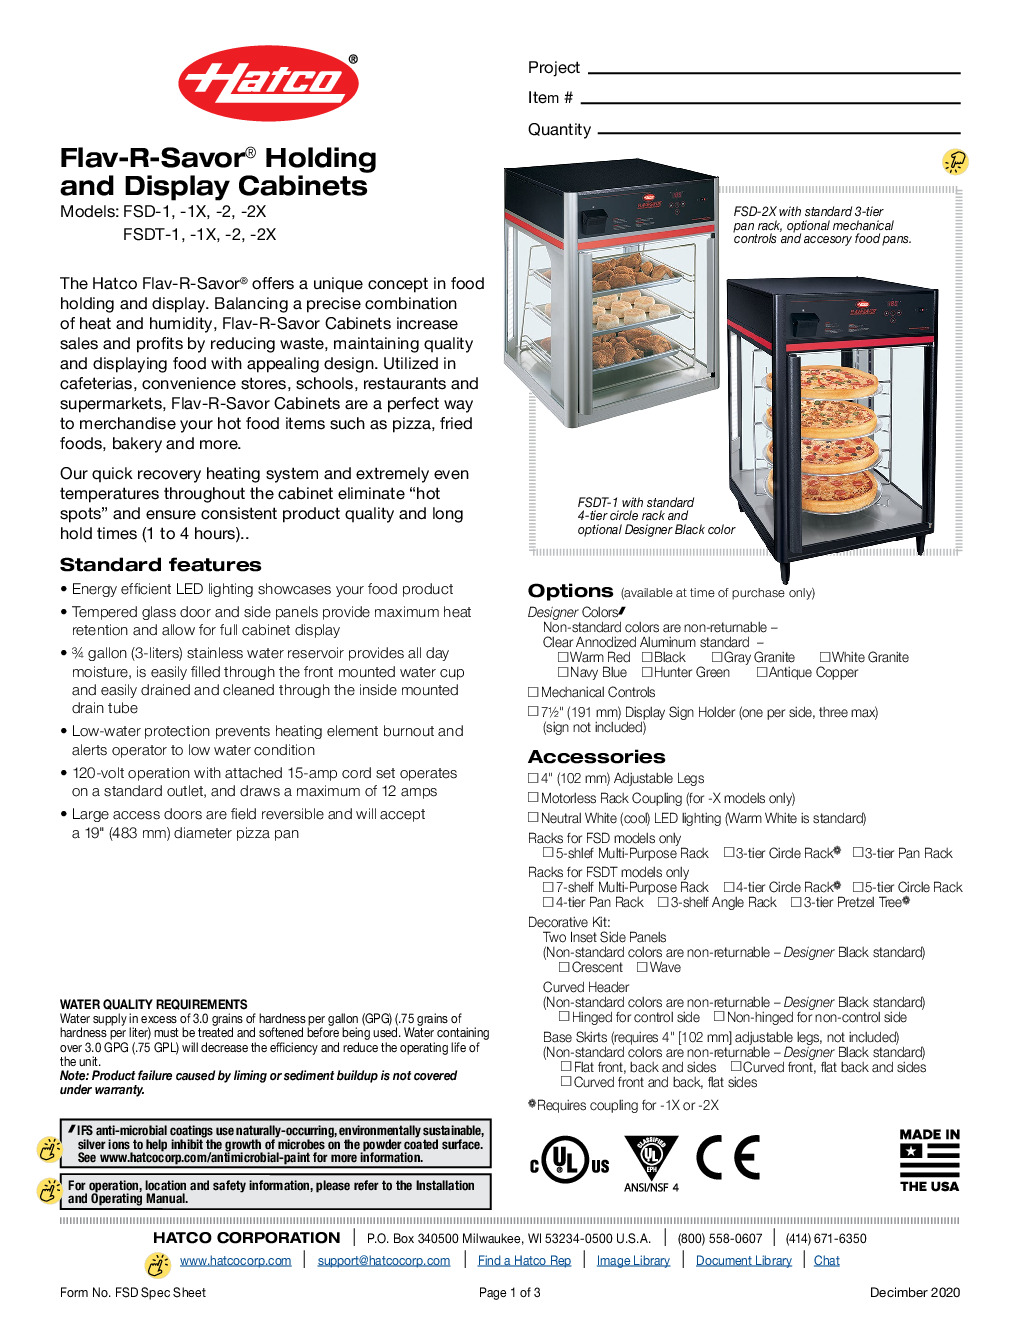 Hatco FSDT-2X Countertop Hot Food Display Case